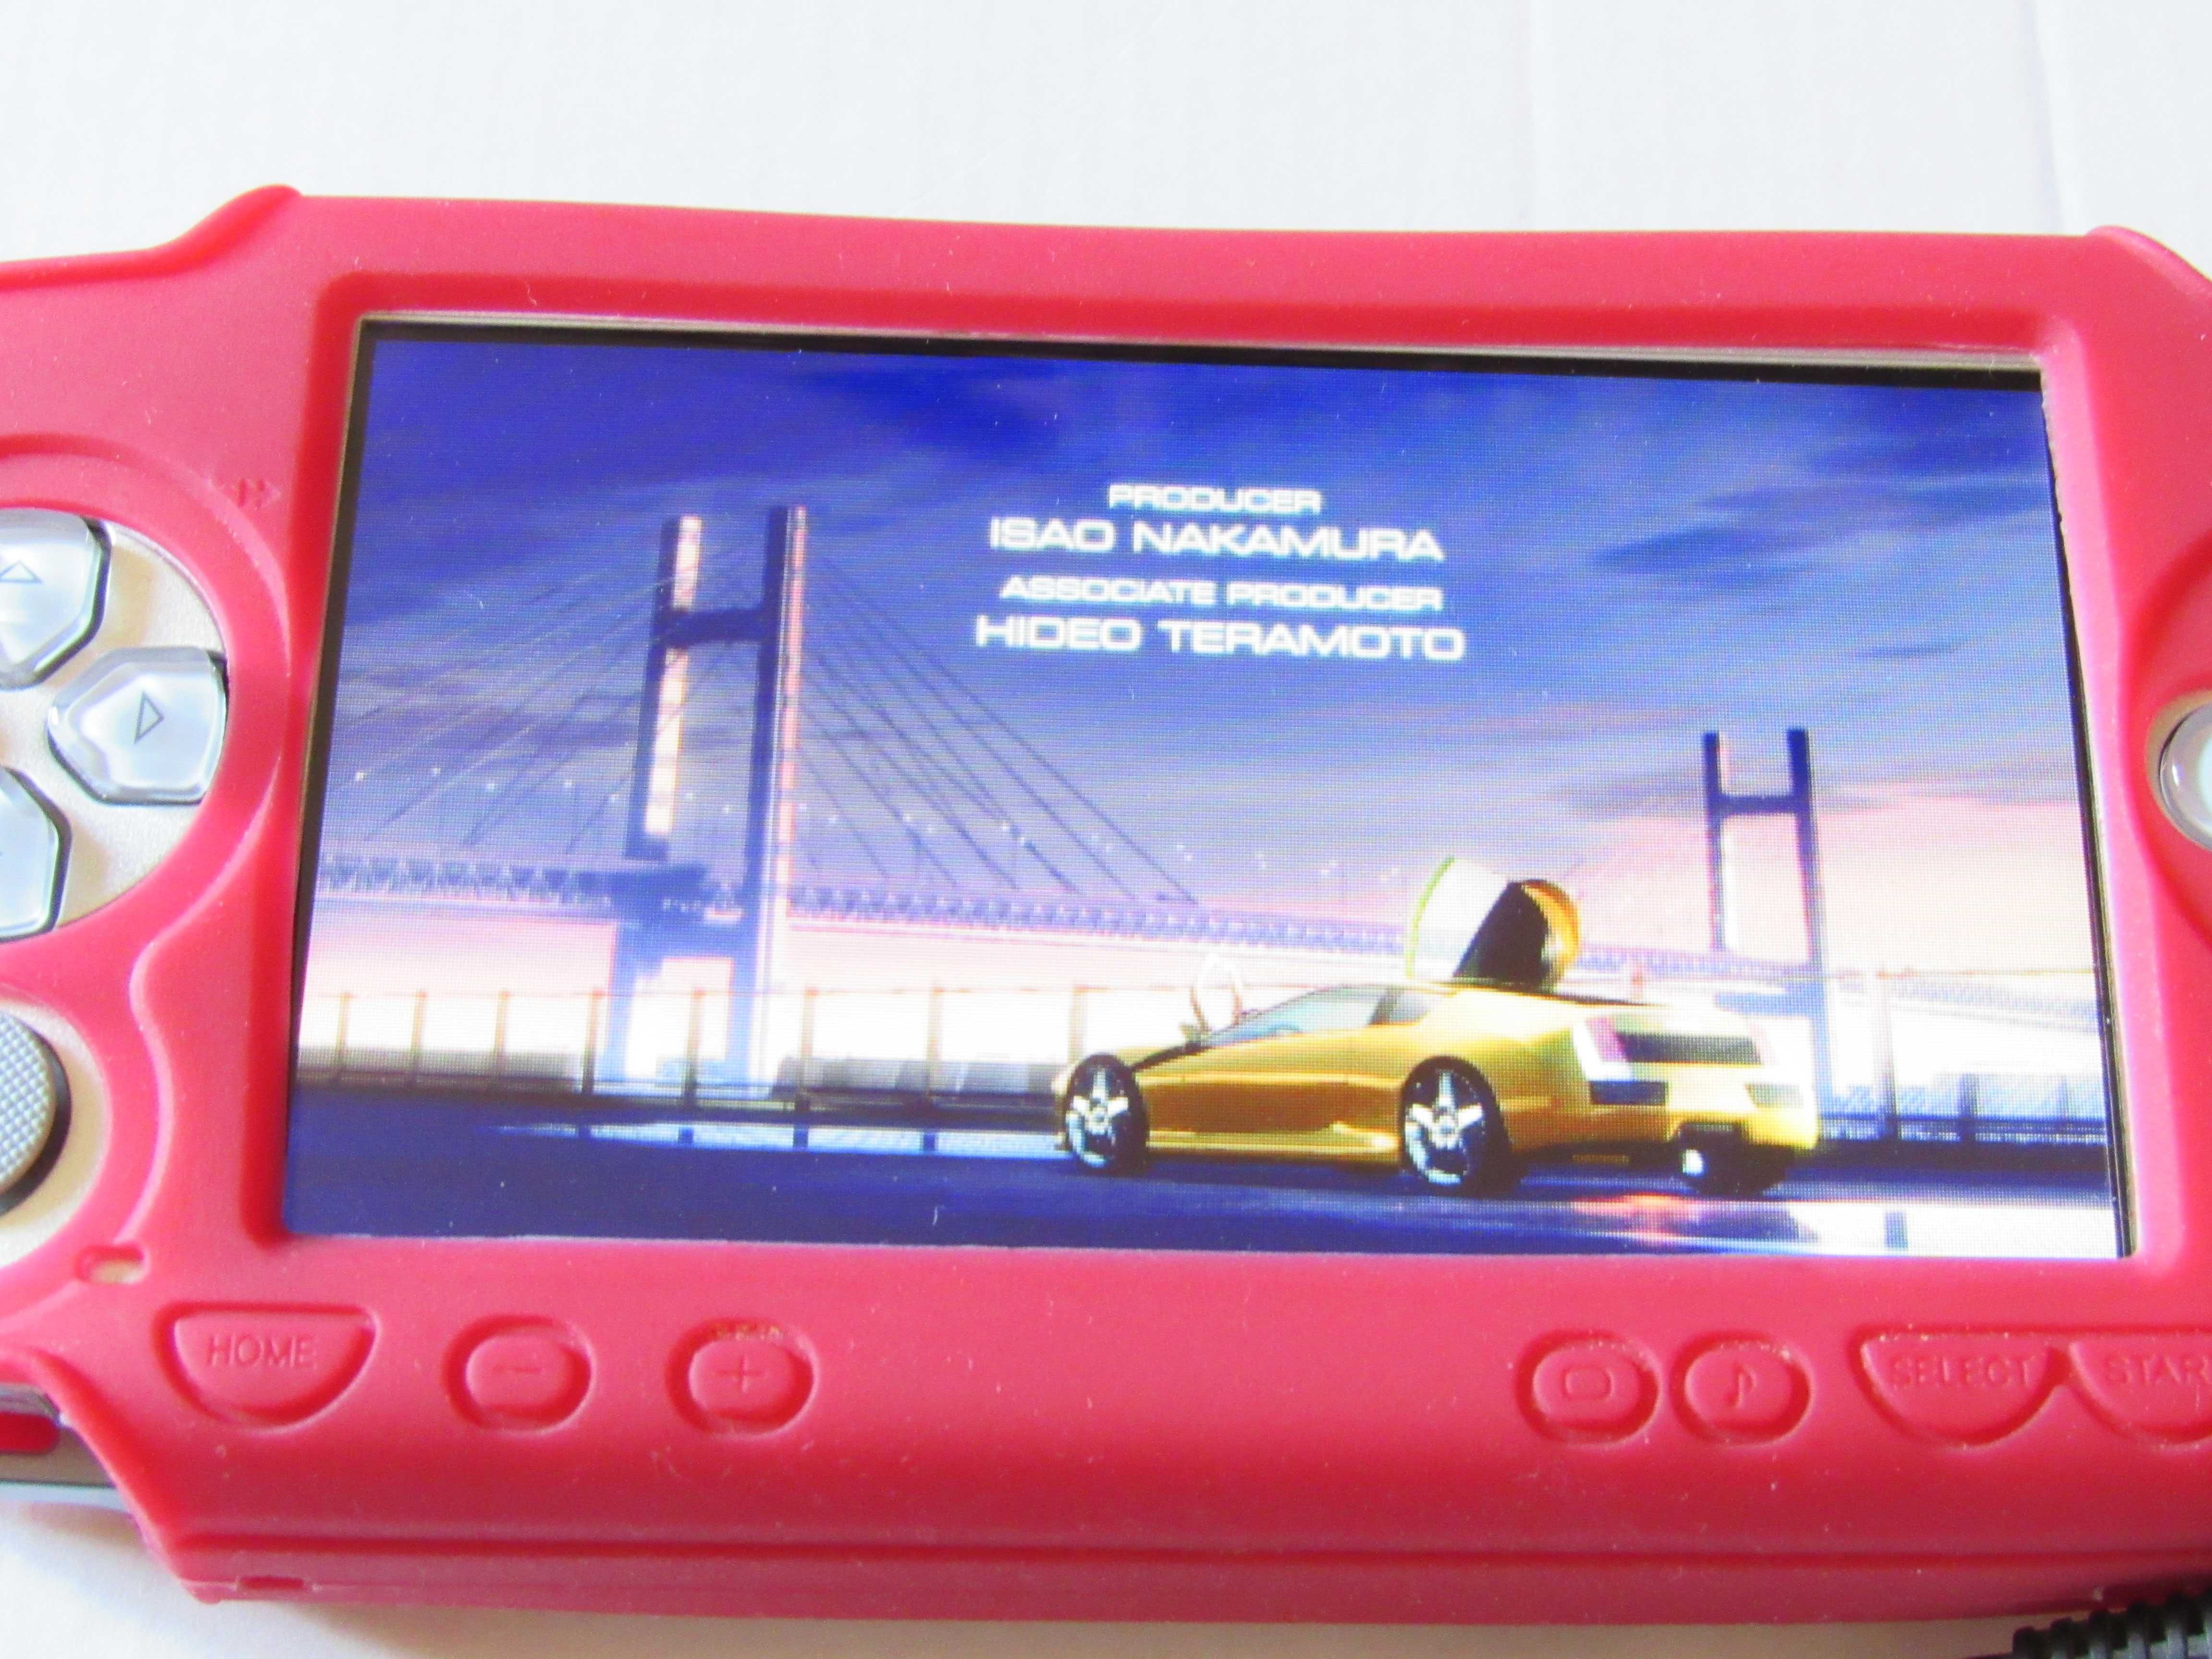 Jogo PSP Playstation Portable Ridge Racer completo testado